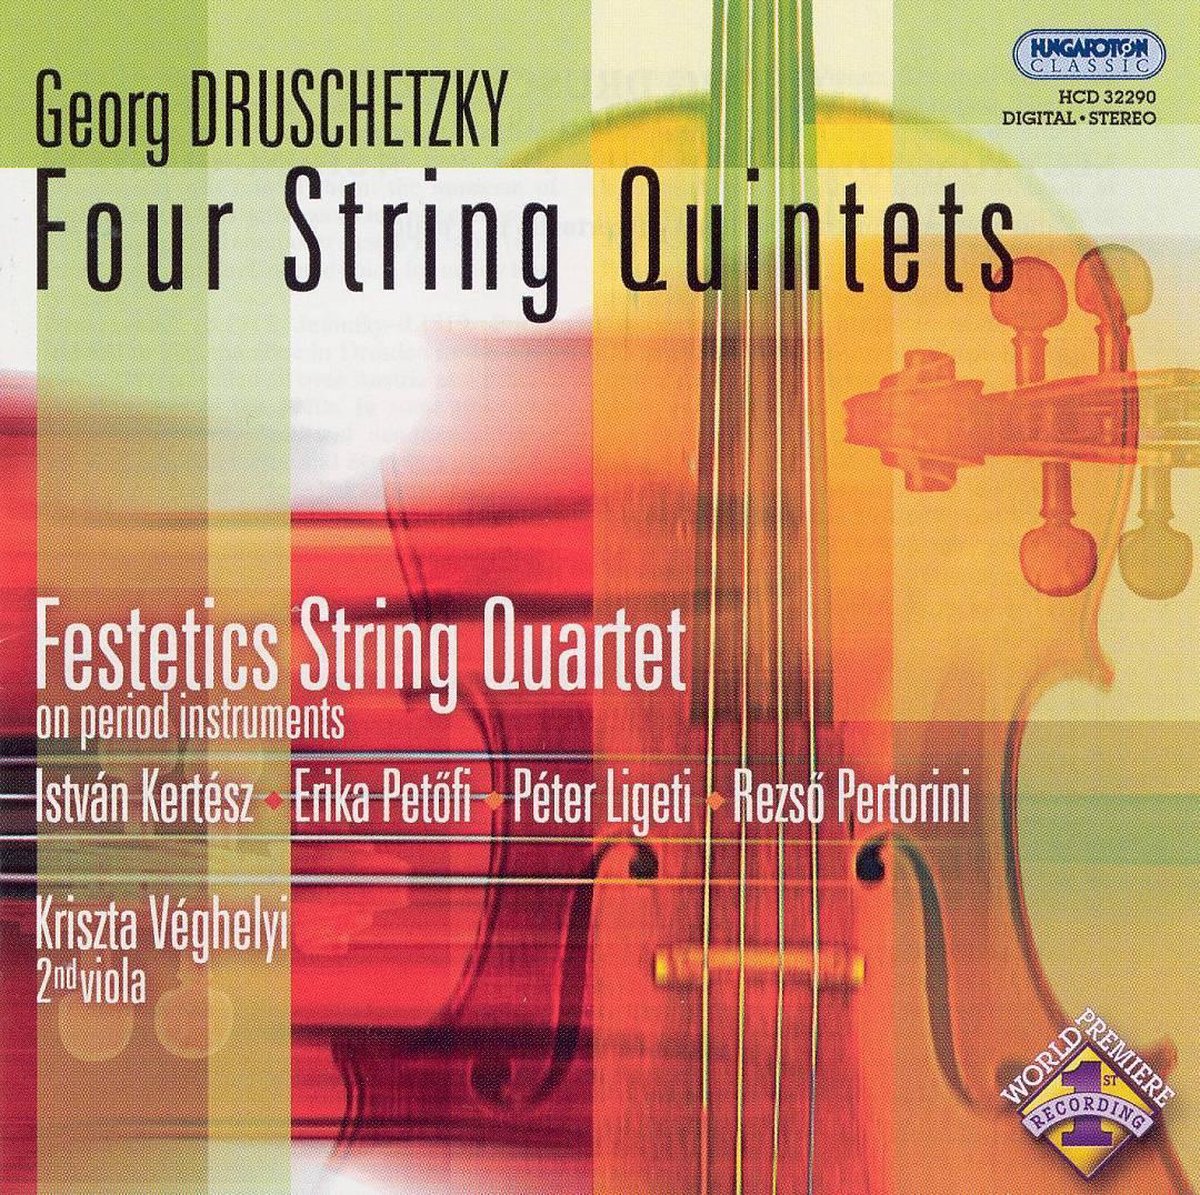 Druschetzky: Four string quintets